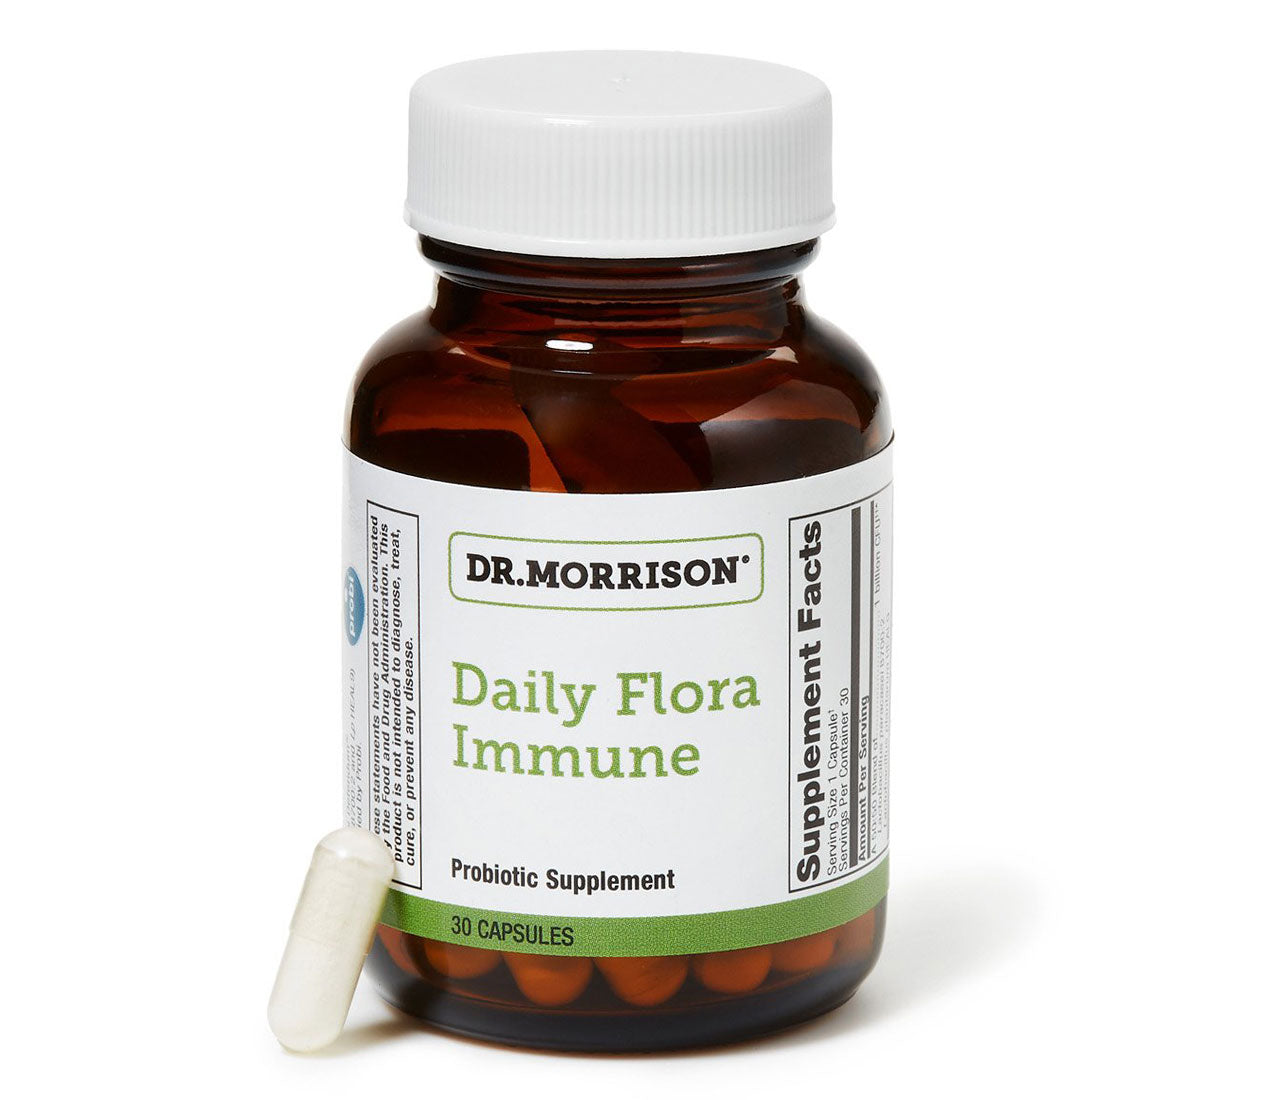 Daily Flora Immune